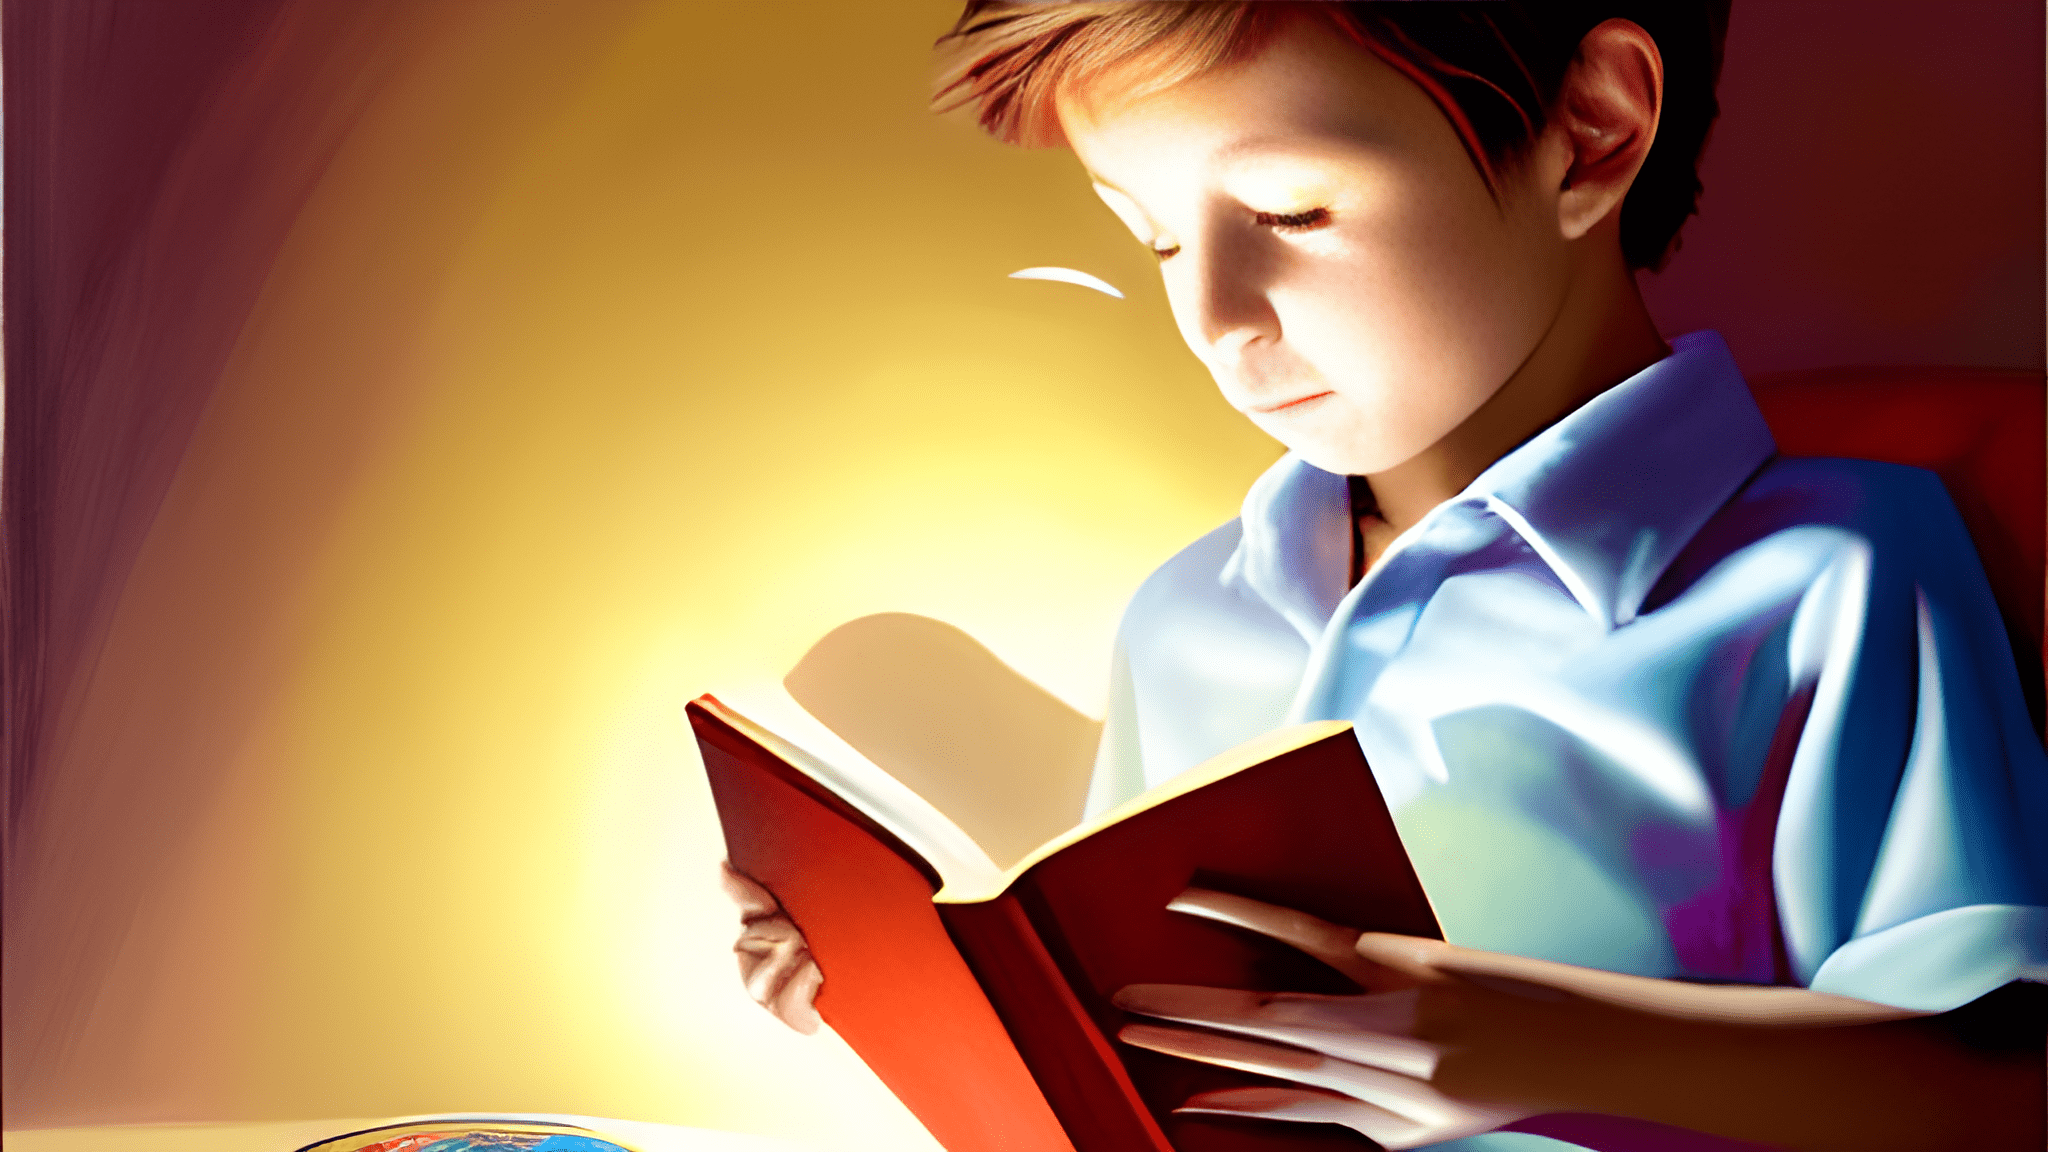 Intelligent boy reading a book